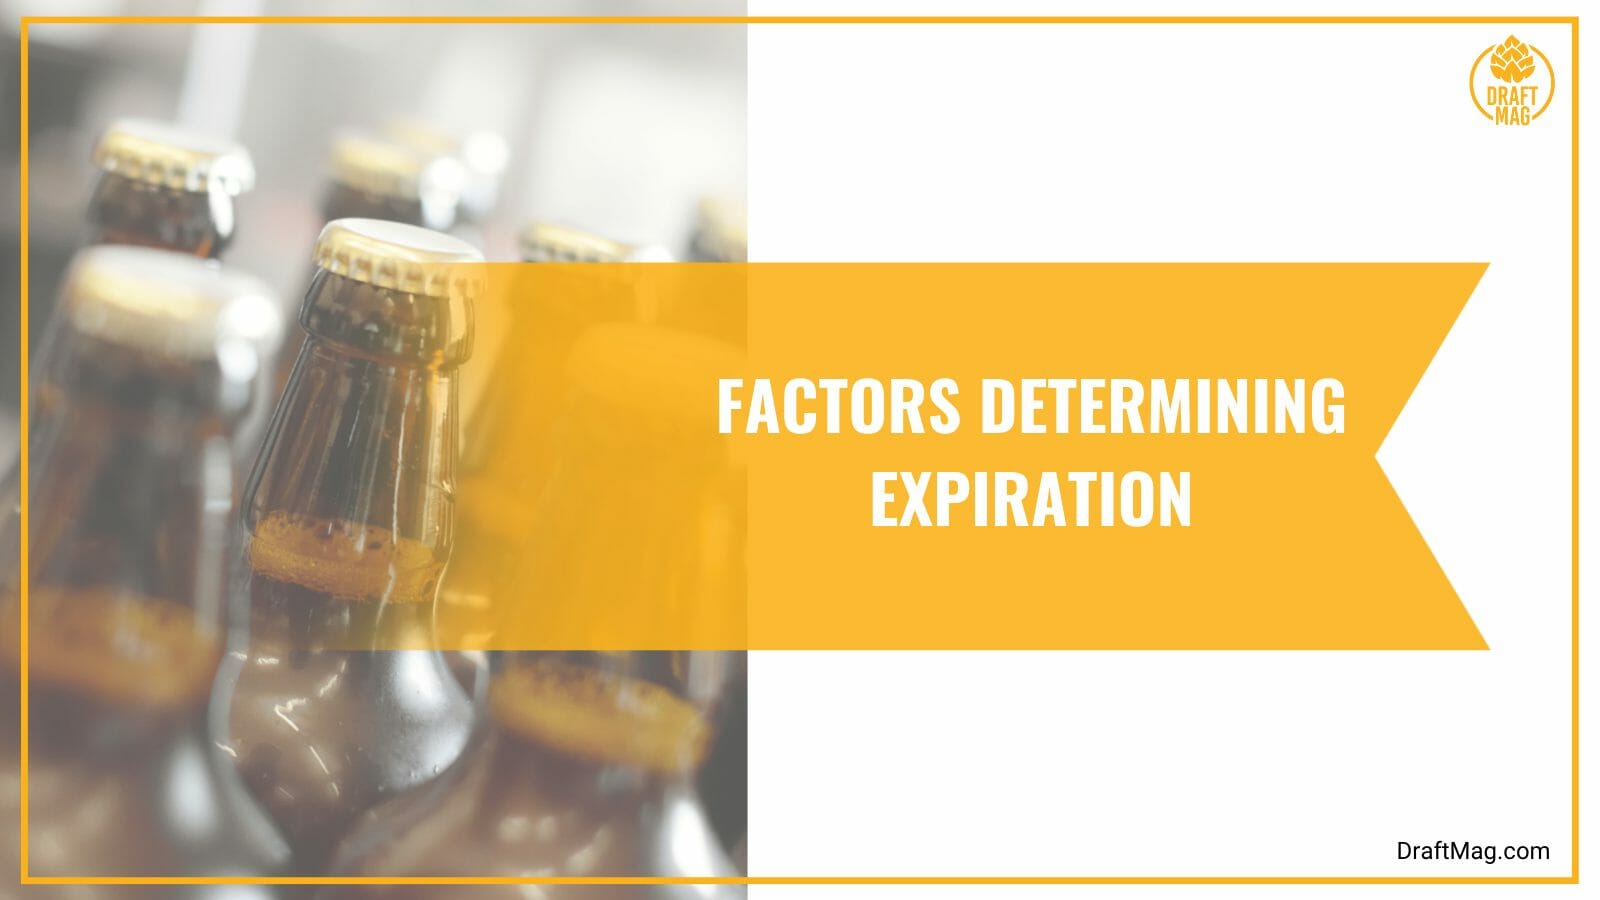 Factors determining expiration on beverages